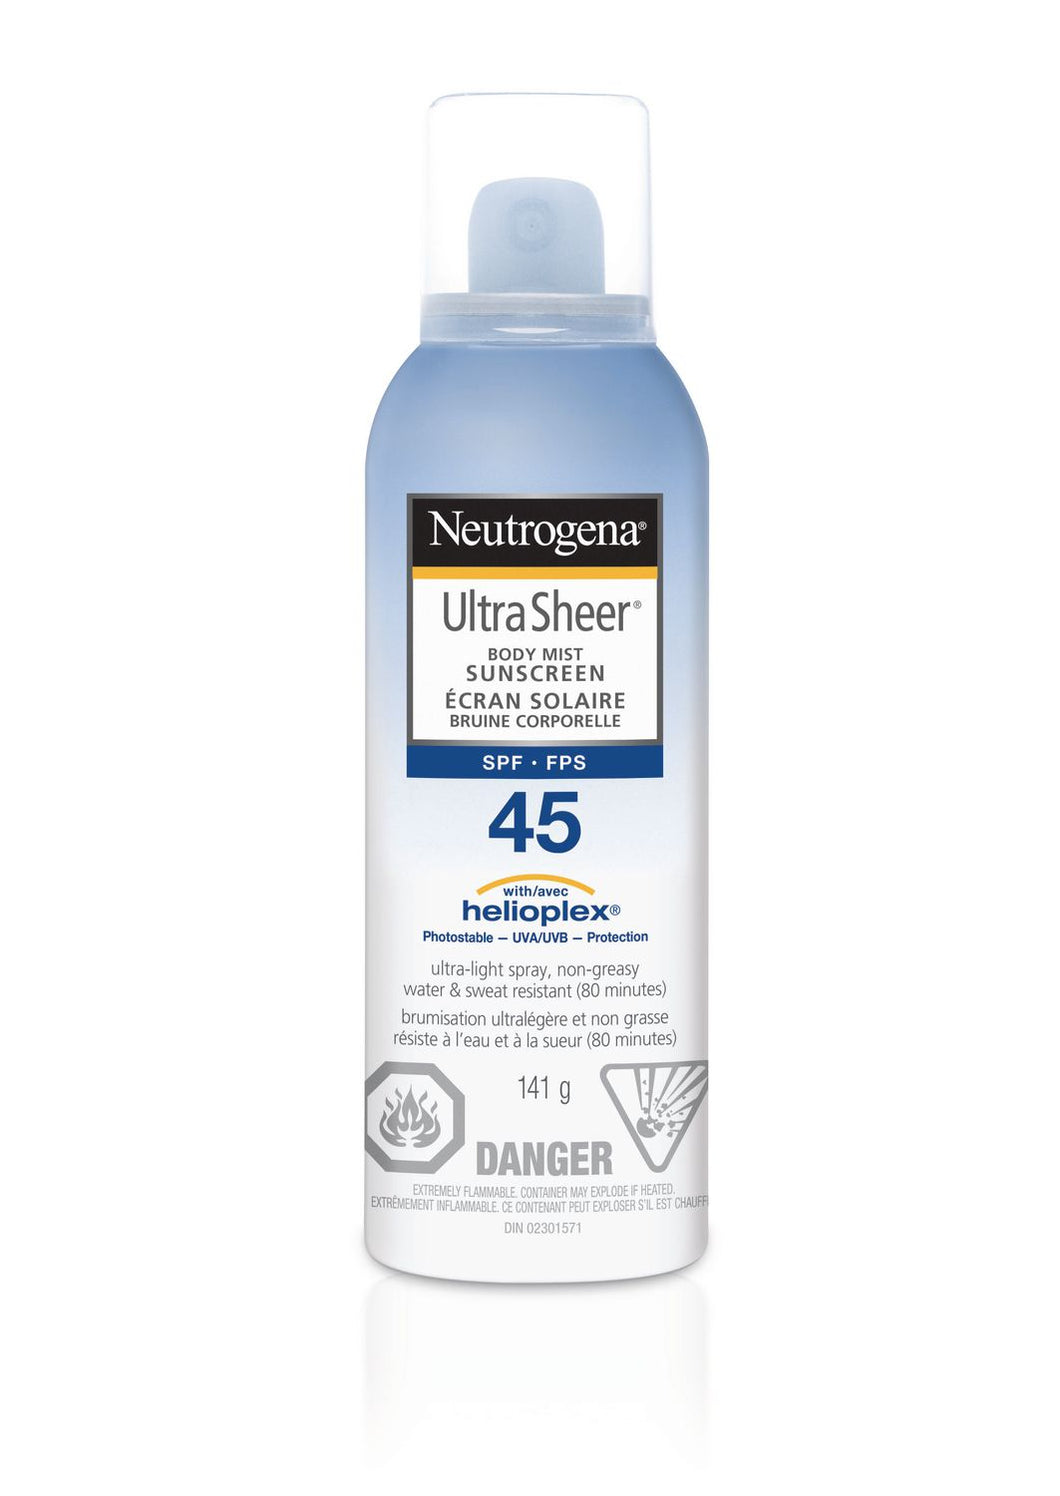 Neutrogena: Ultra Sheer SPF45 Body Mist Sunscreen Spray